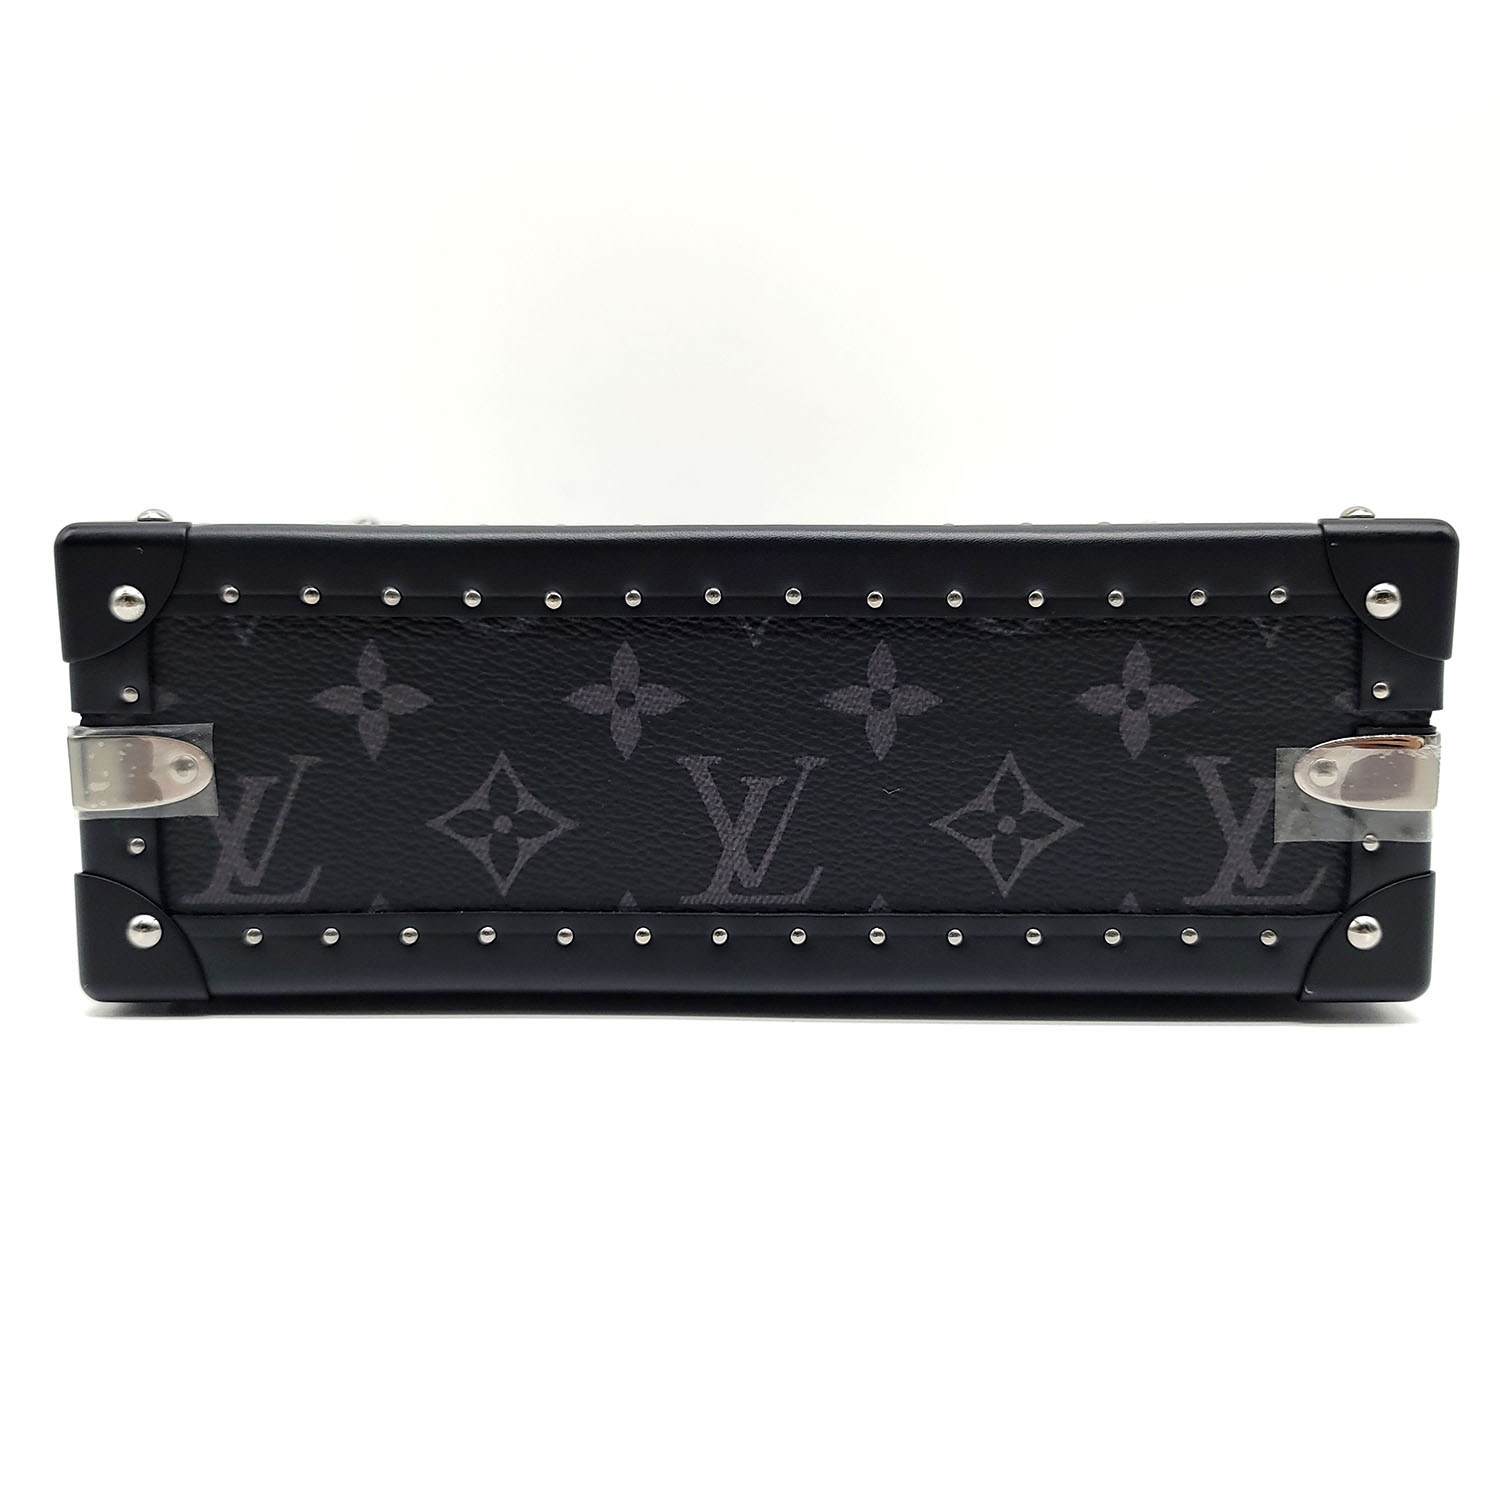 Louis Vuitton Clutch Box in Monogram - New